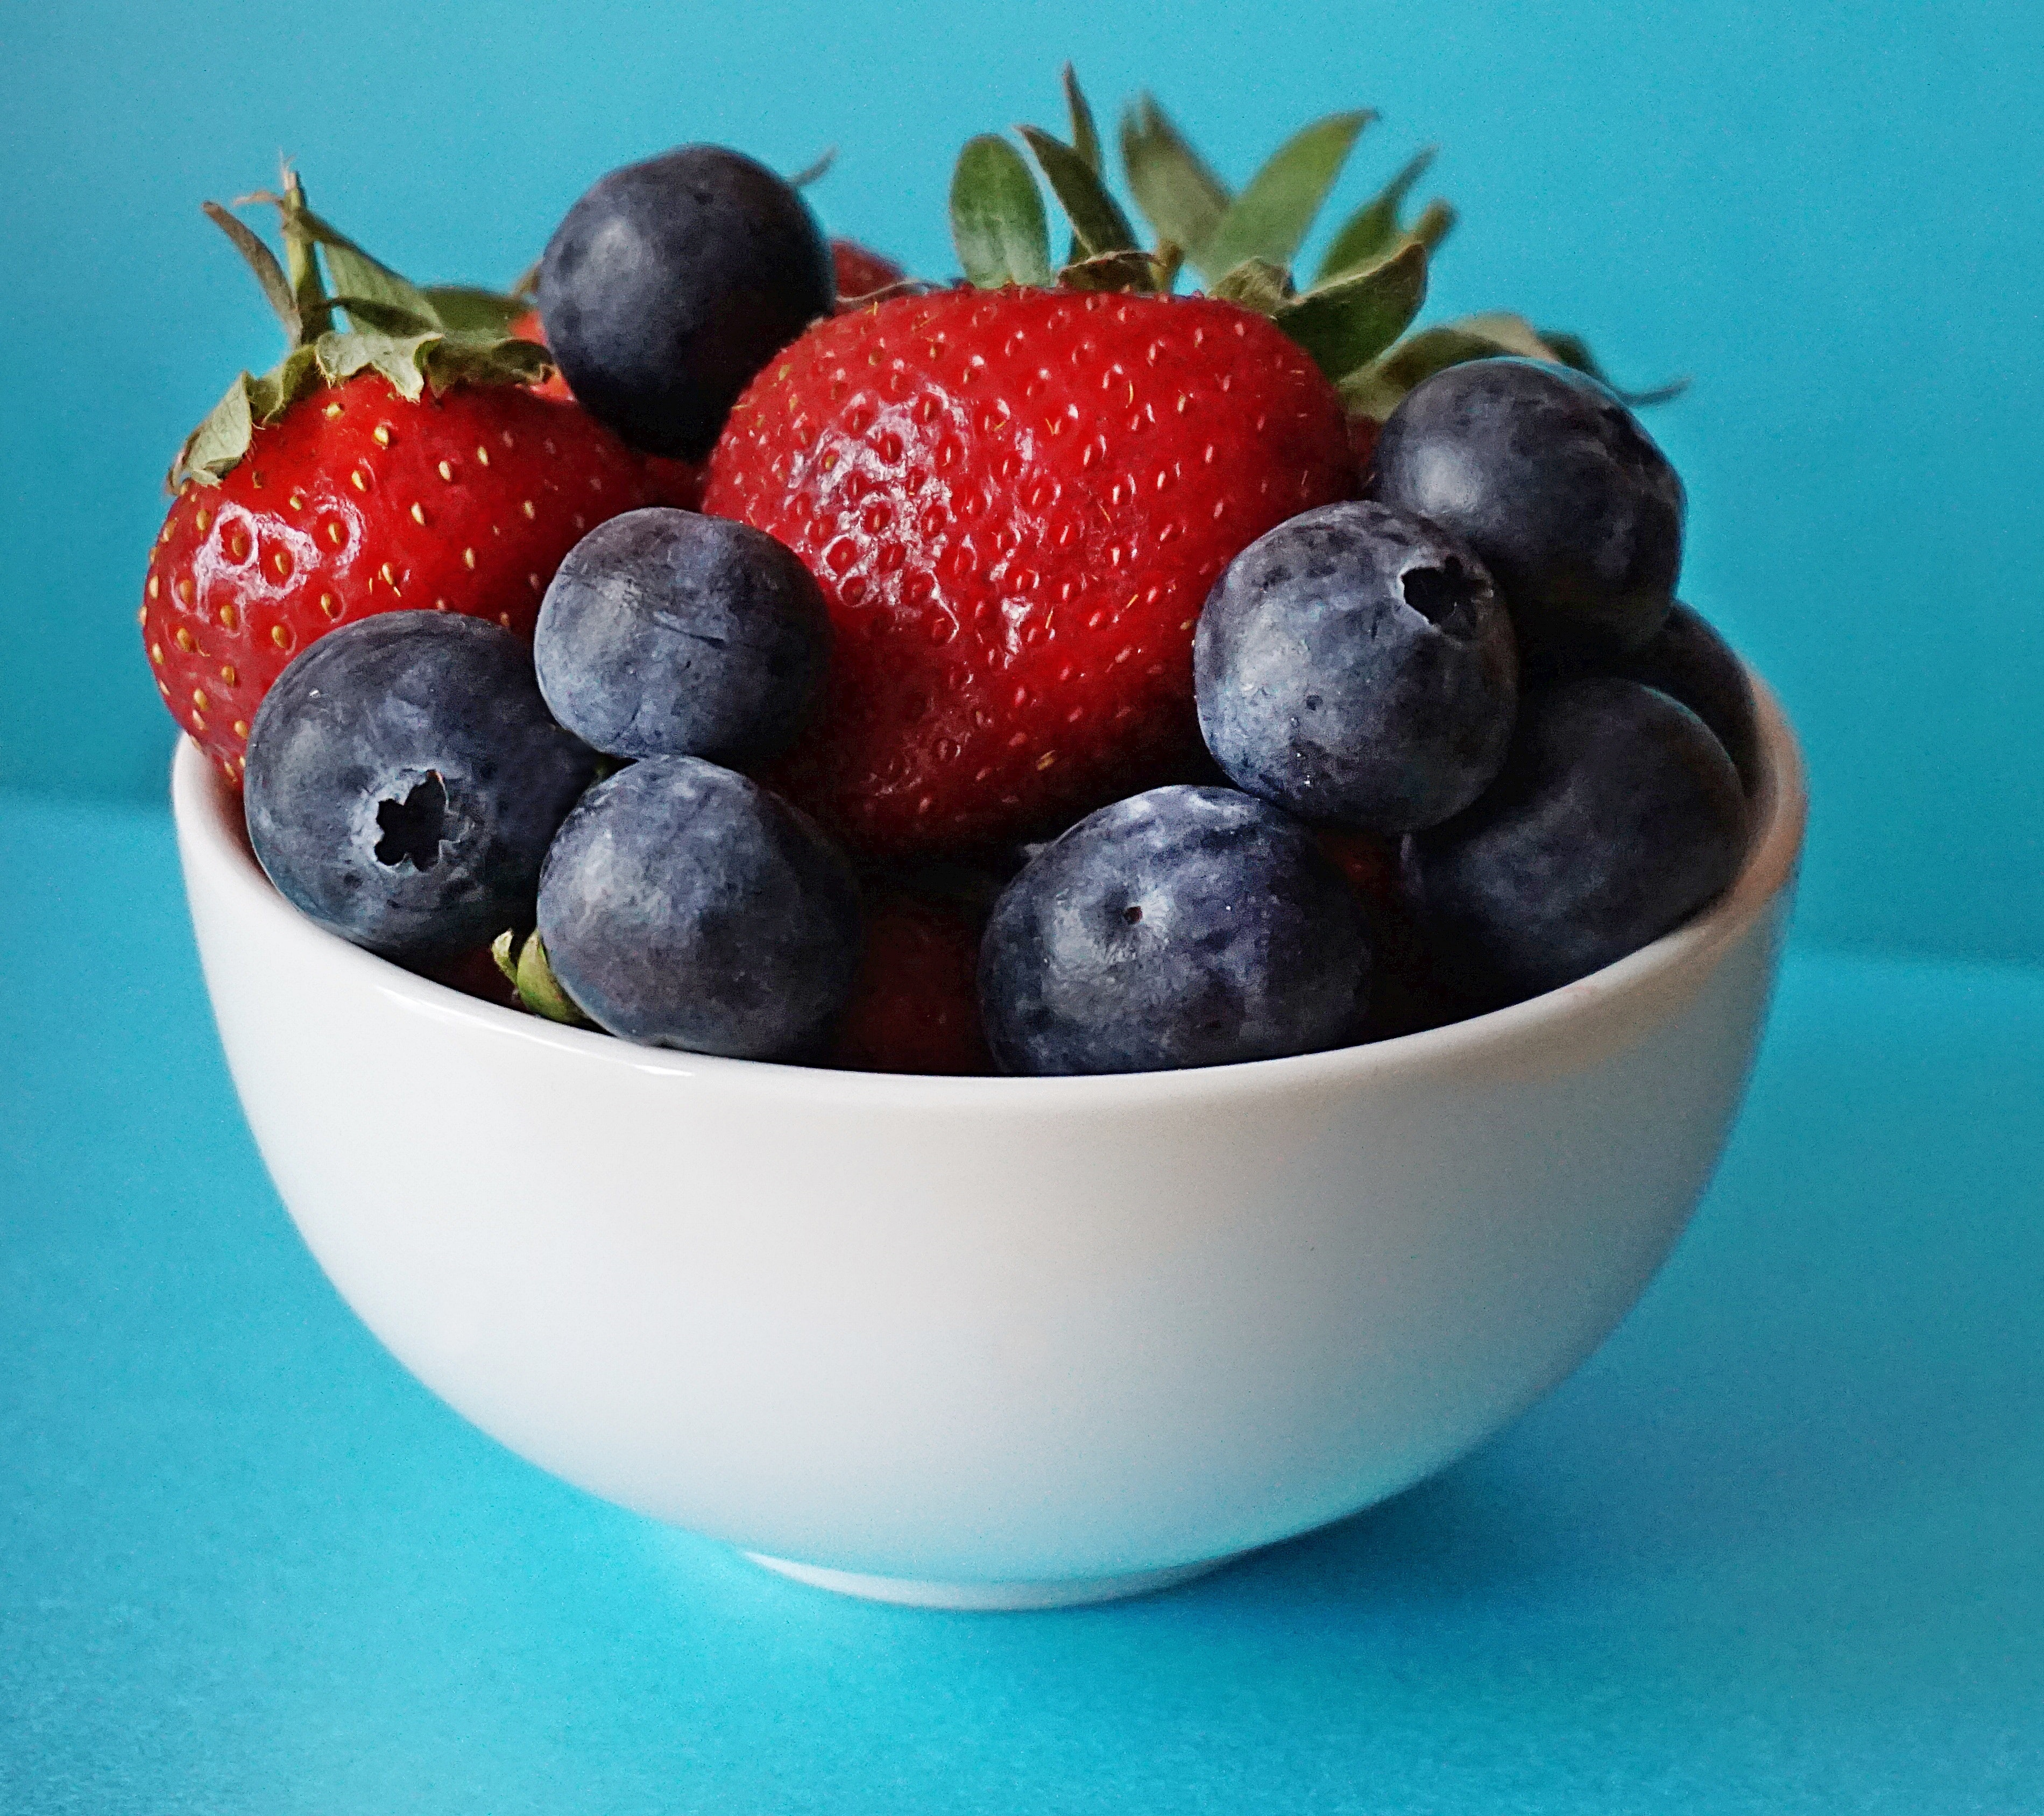 Vitamin-D Rich Fruits for Good Health